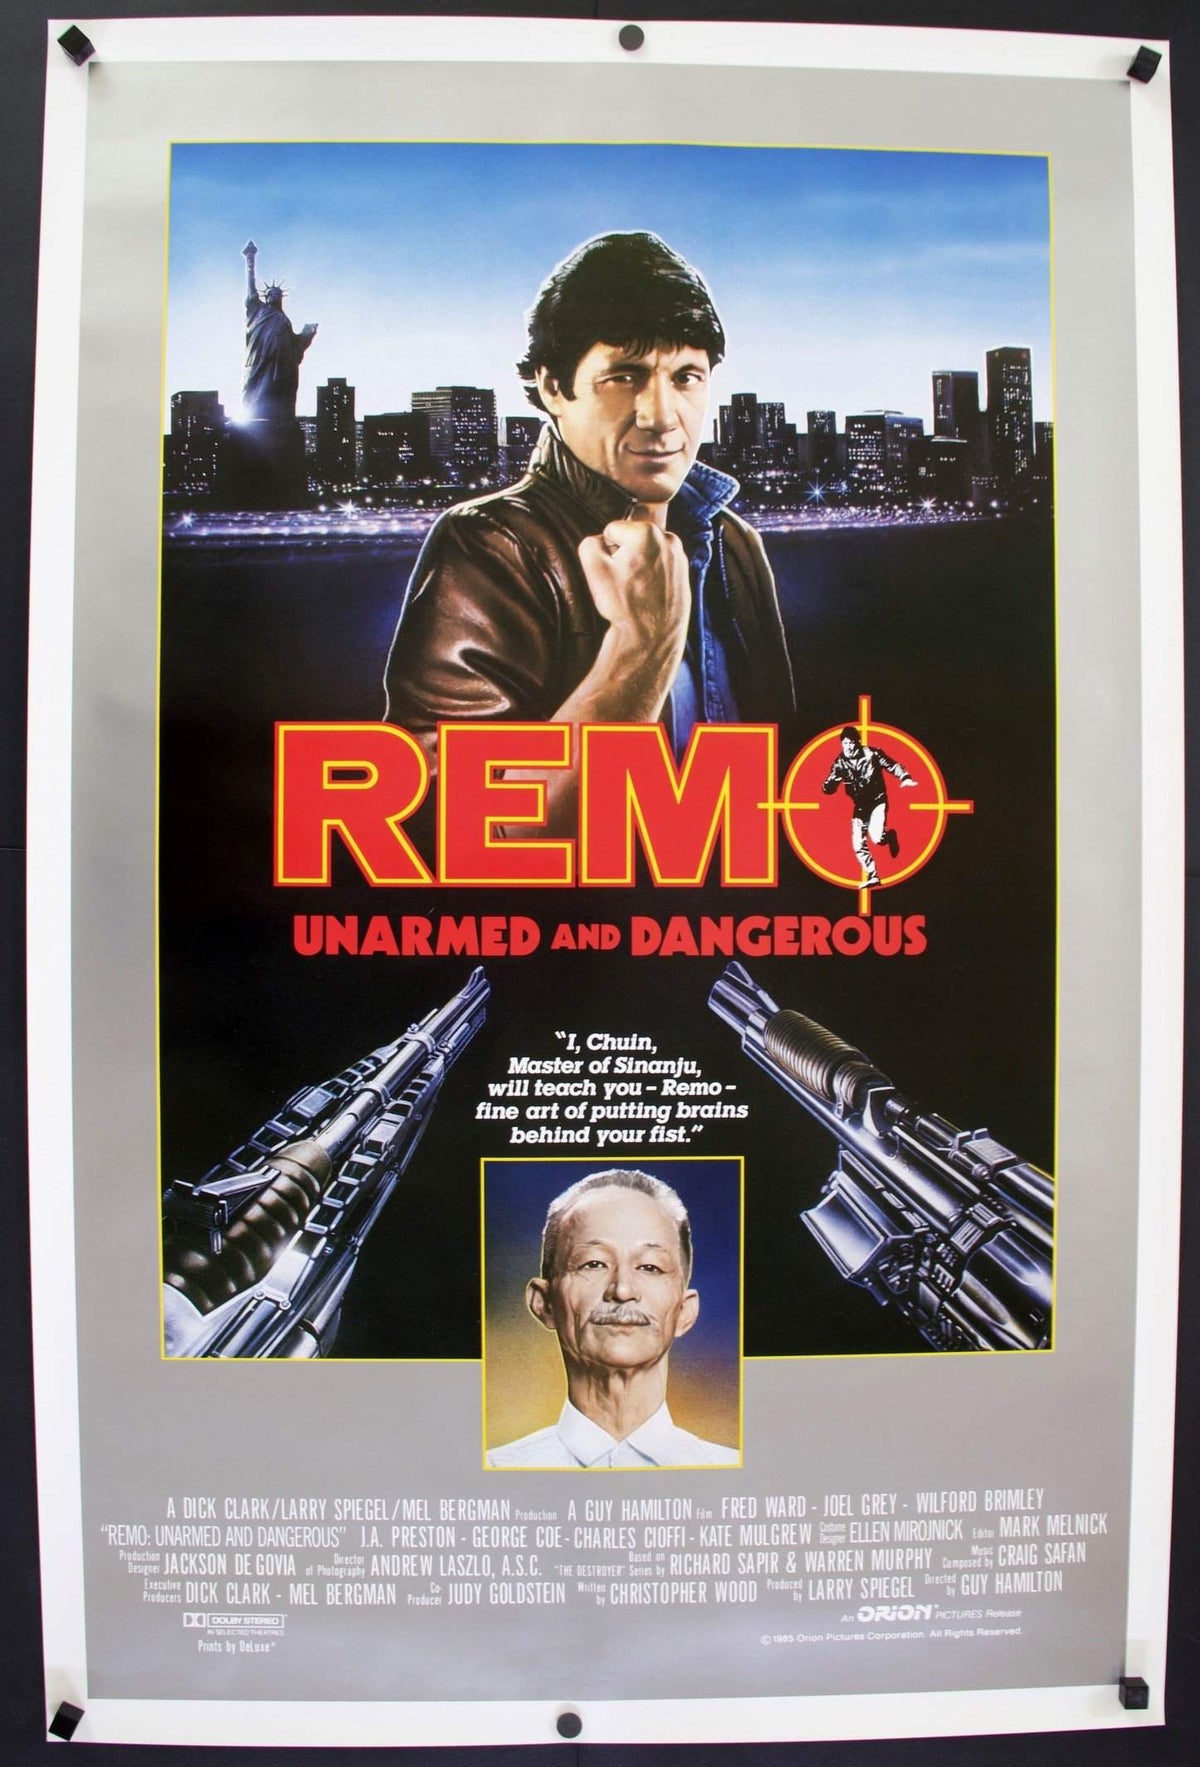 Remo Williams: The Adventure Begins (1985) original movie poster for sale at Original Film Art